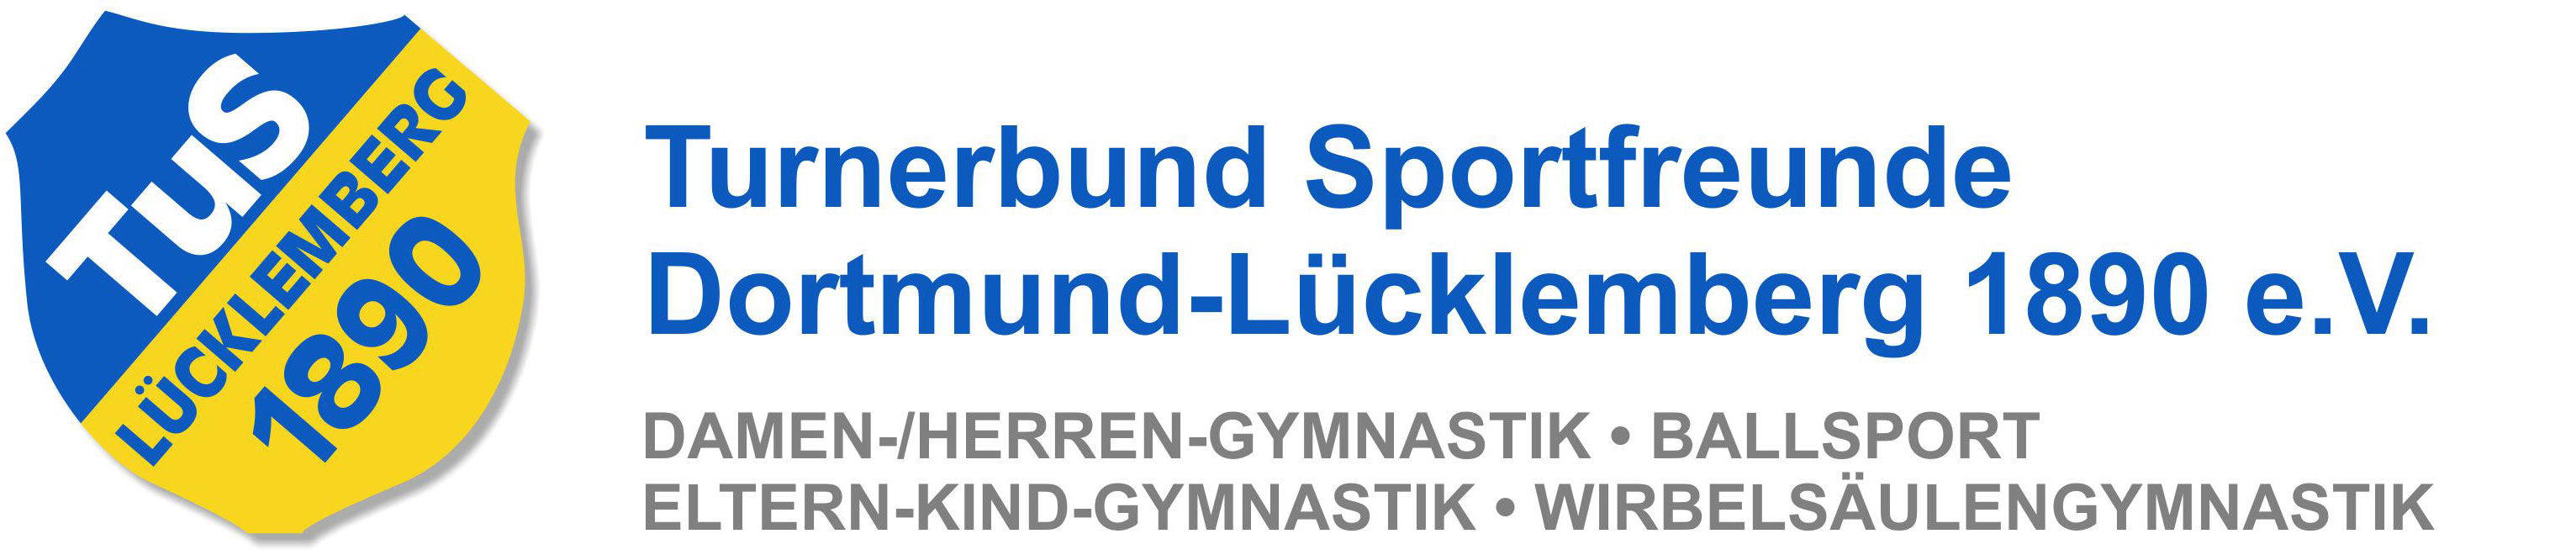 Turnerbund Sportfreunde Lücklemberg 1890 eV